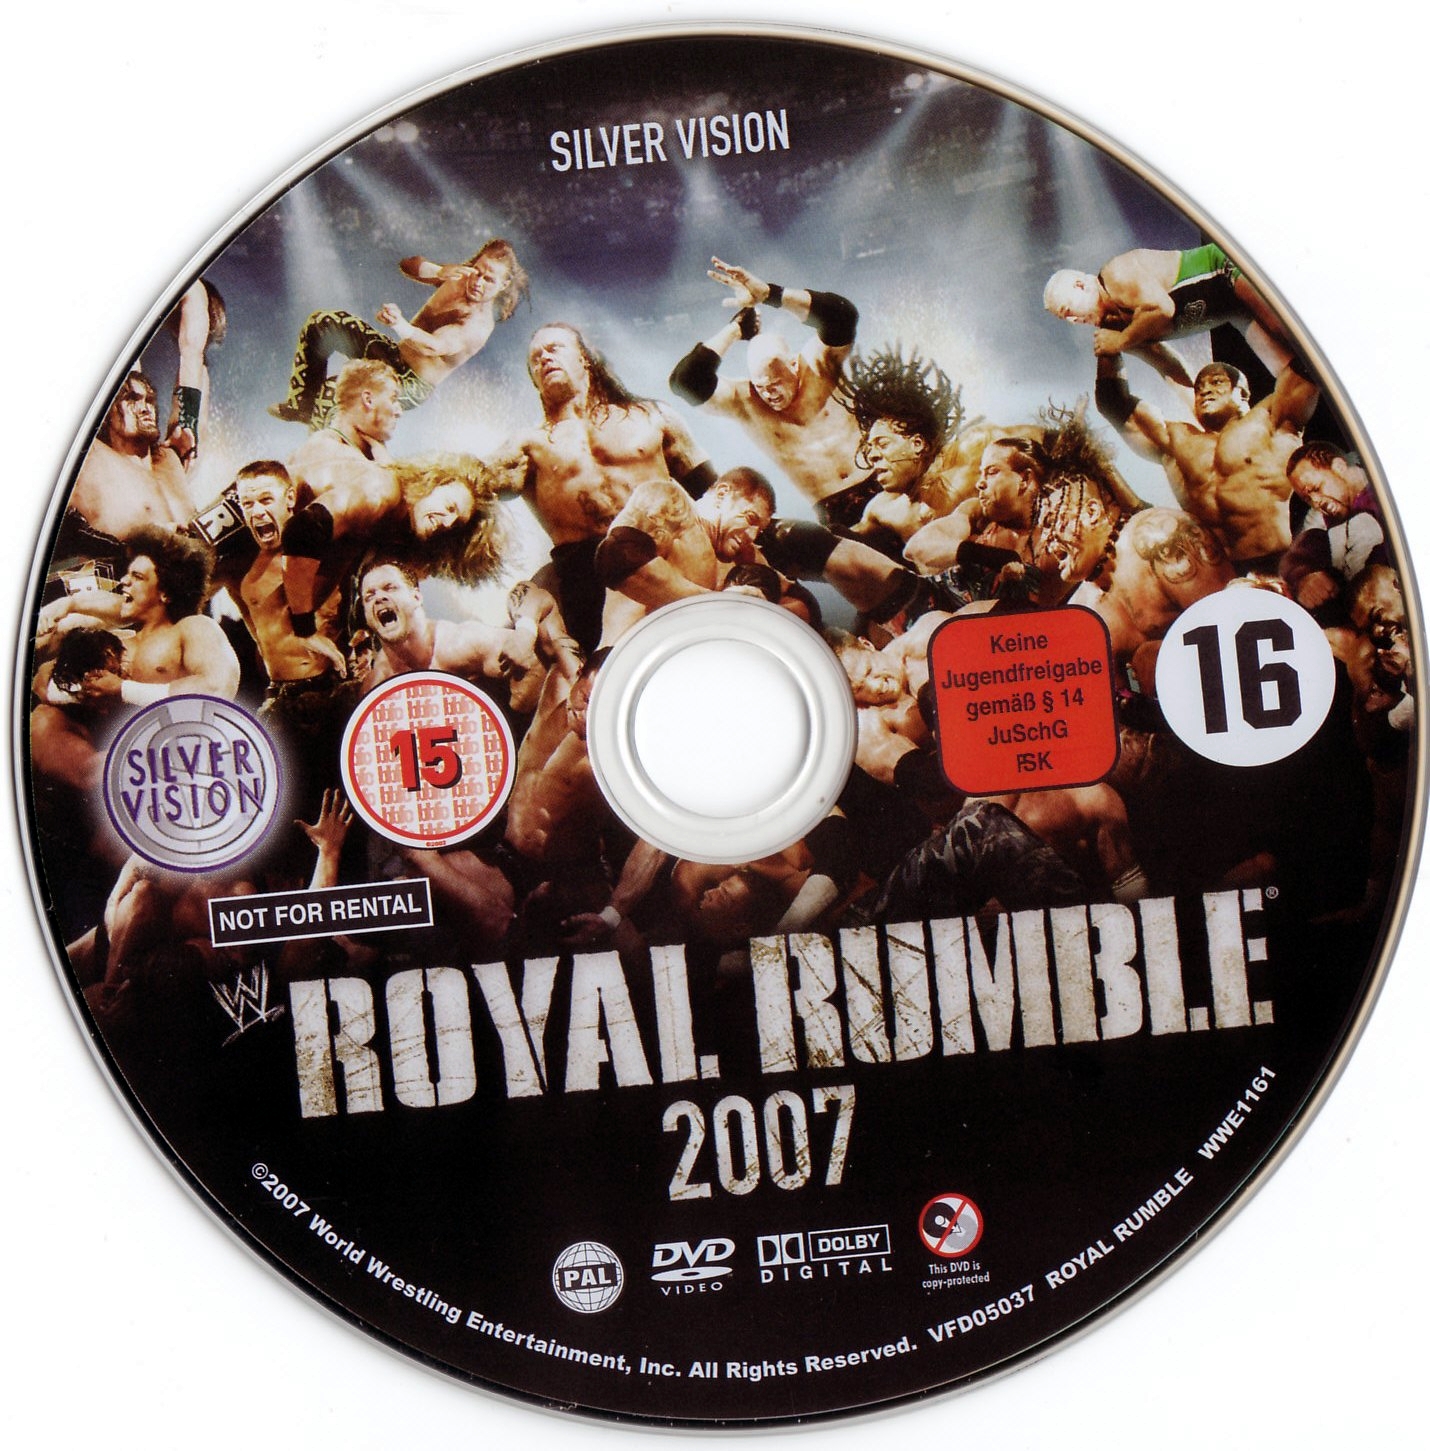 WWE Royal Rumble 2007